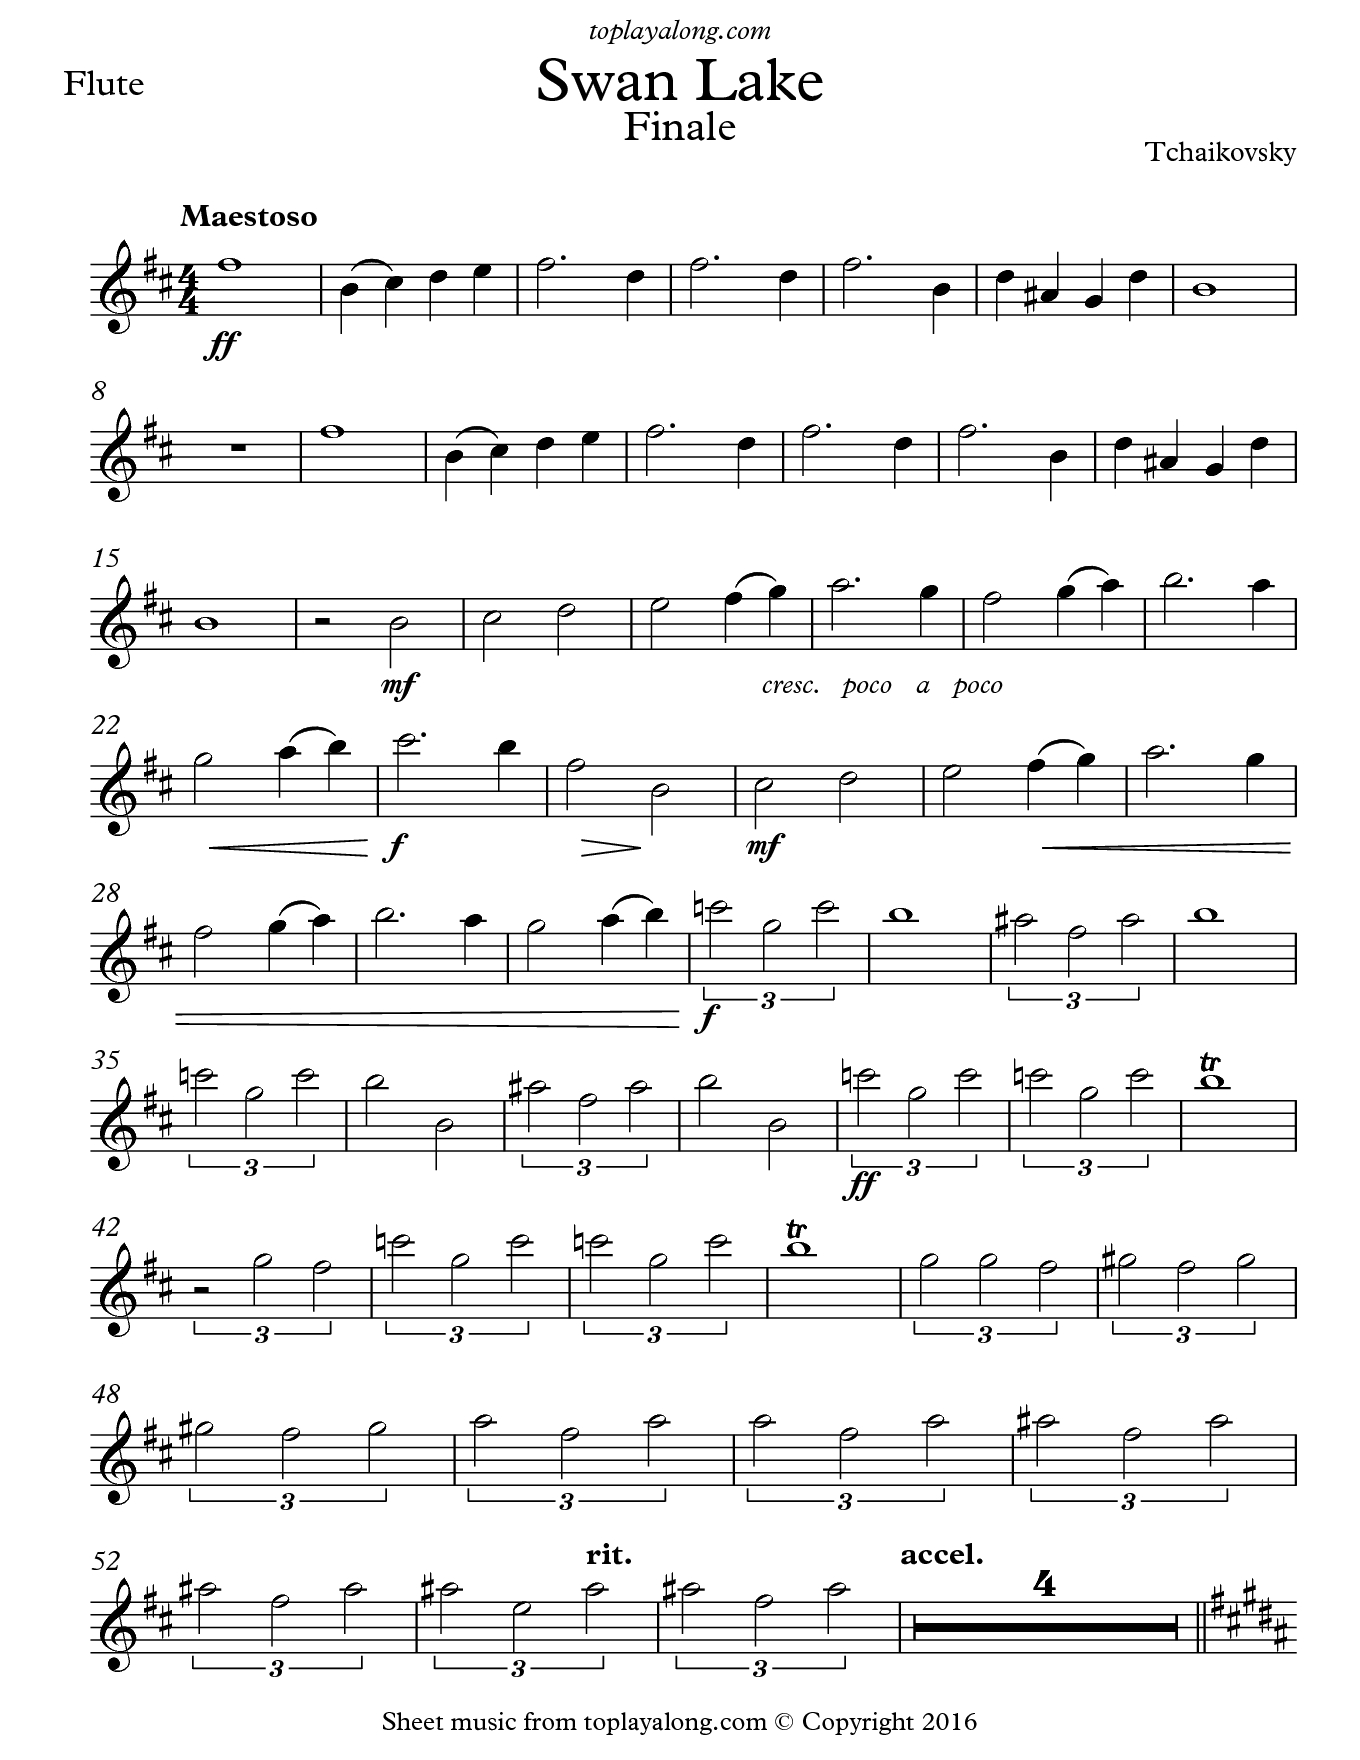 Free Flute Sheet Music For Swan Lake Finaletchaikovsky With - Free Printable Flute Sheet Music